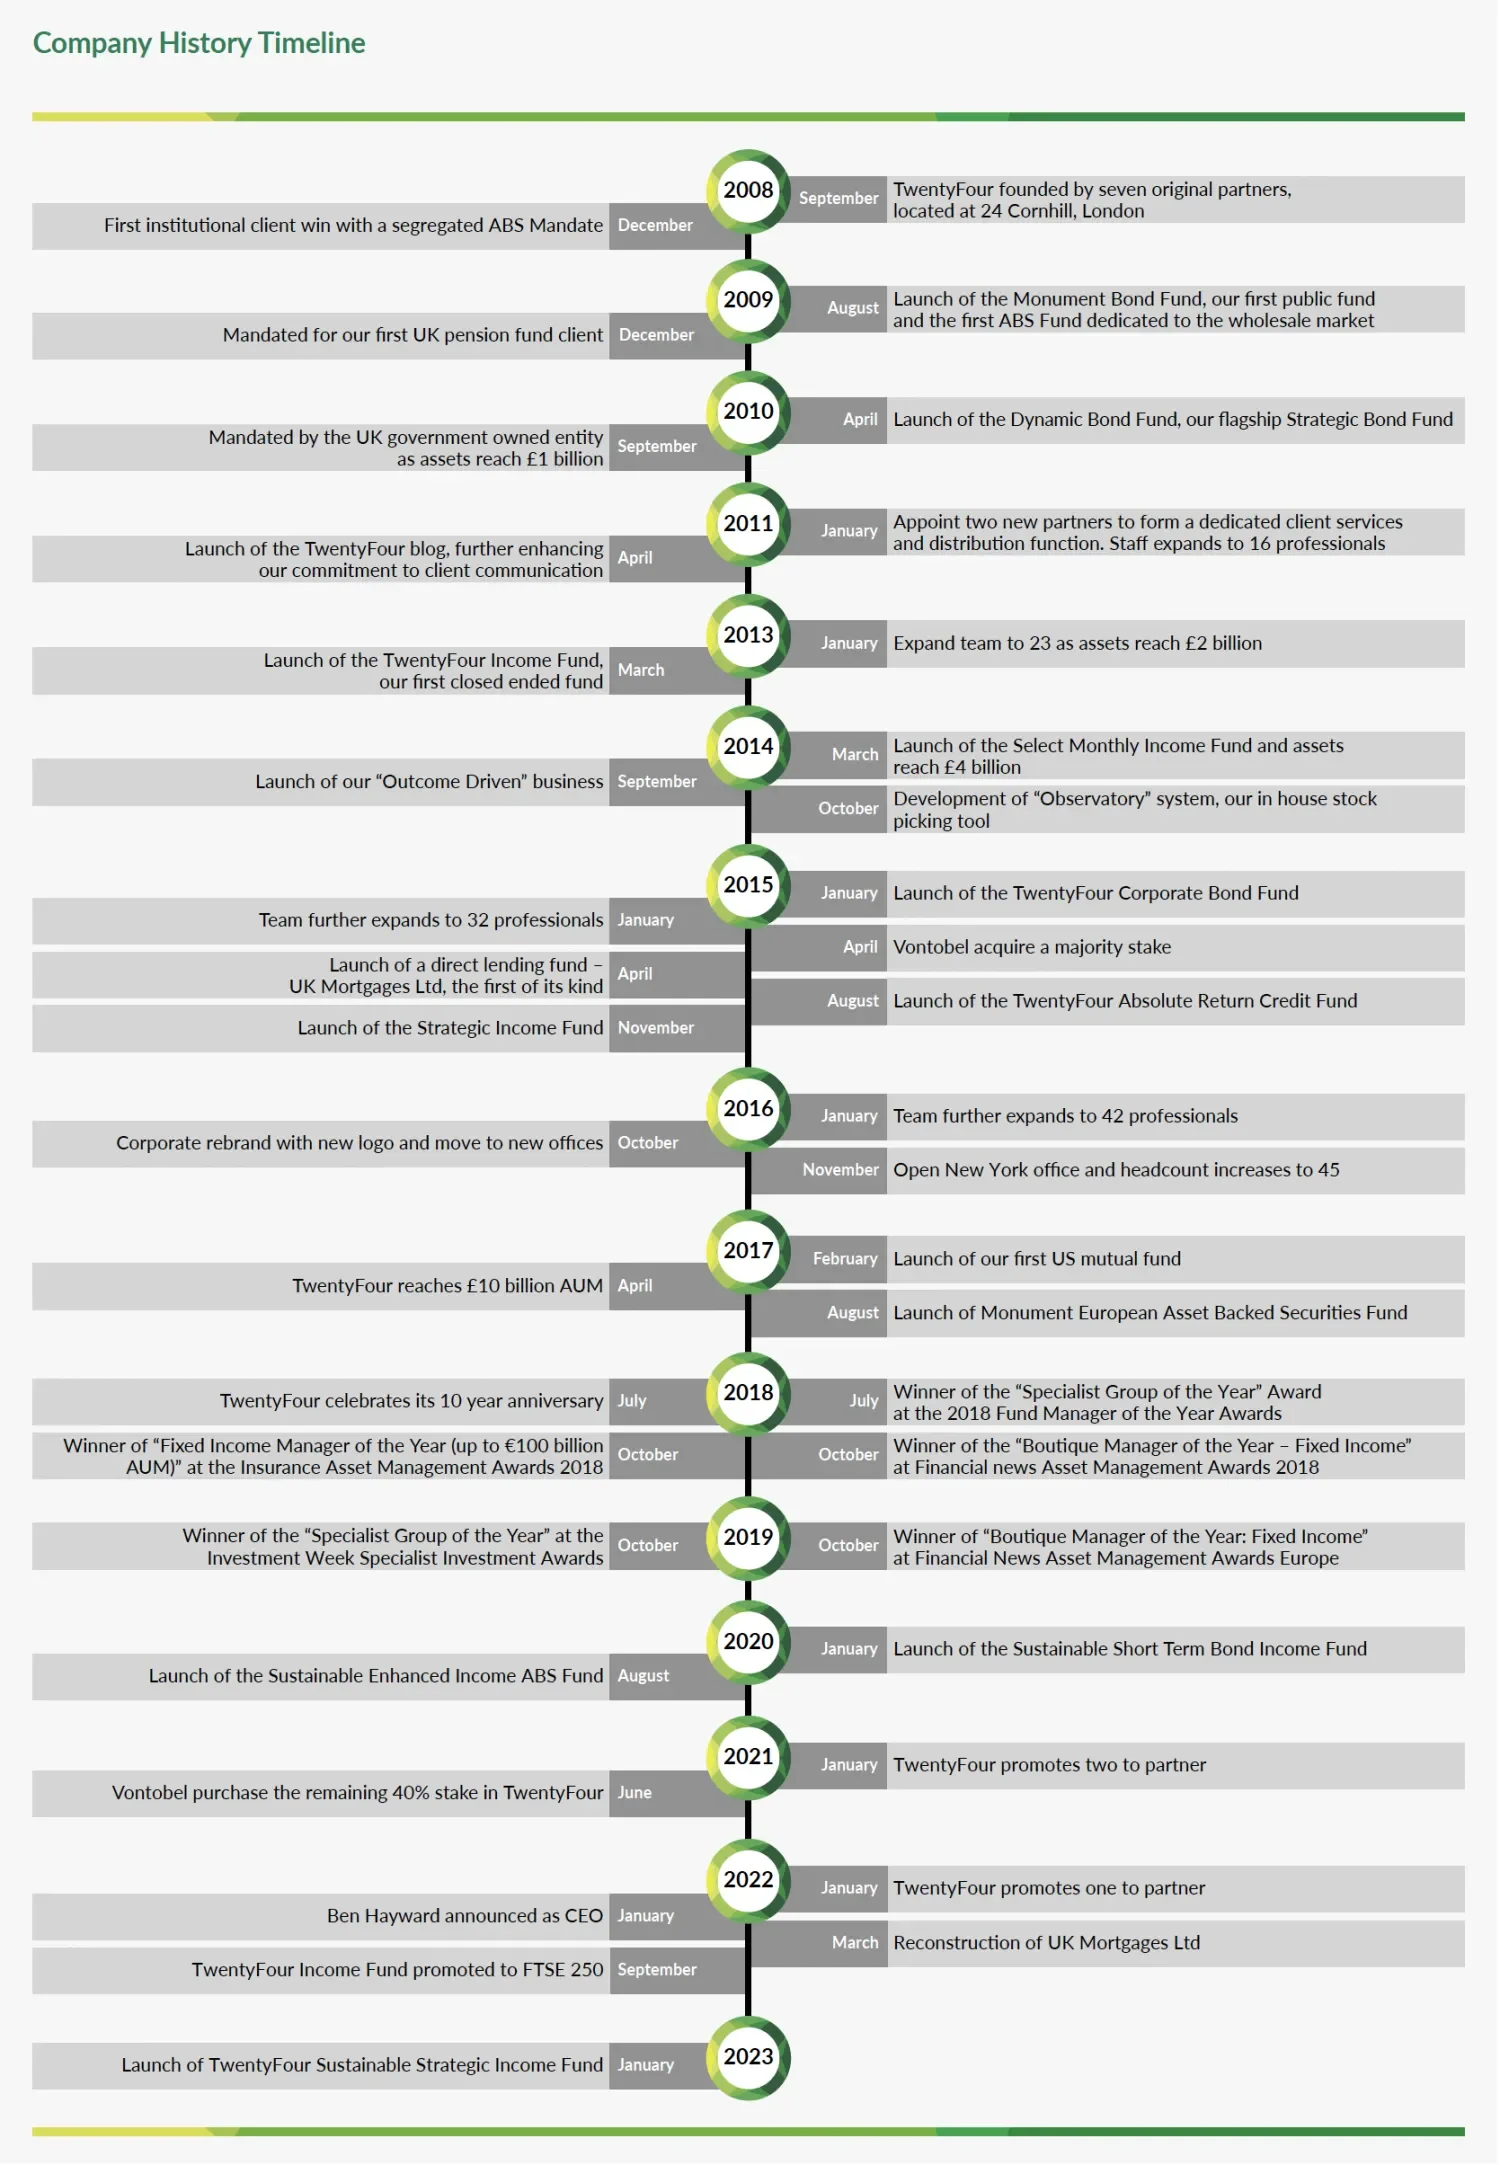 Company history timeline